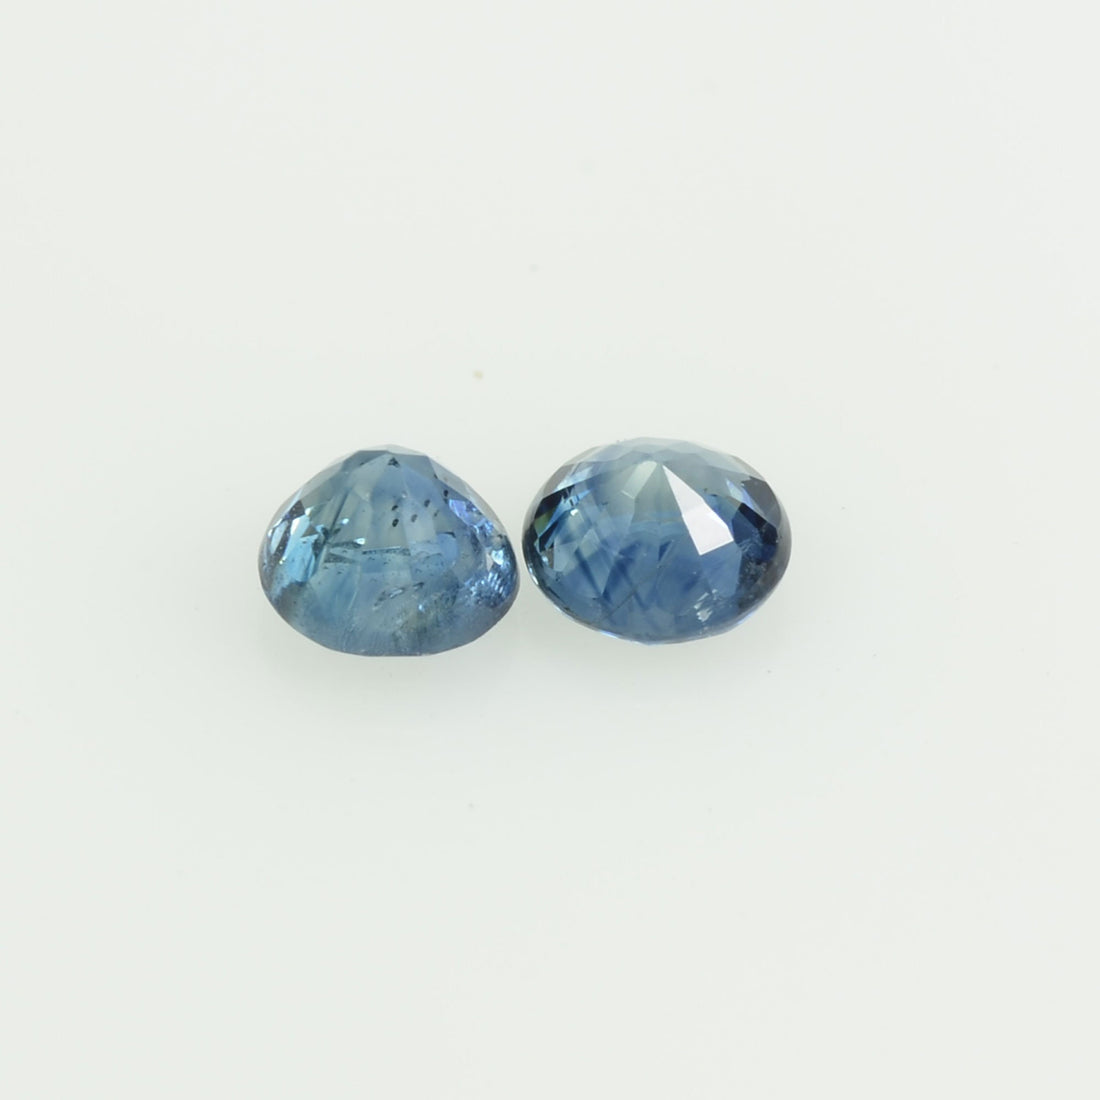 3.2 mm Natural Blue Sapphire Loose Gemstone Round Cut